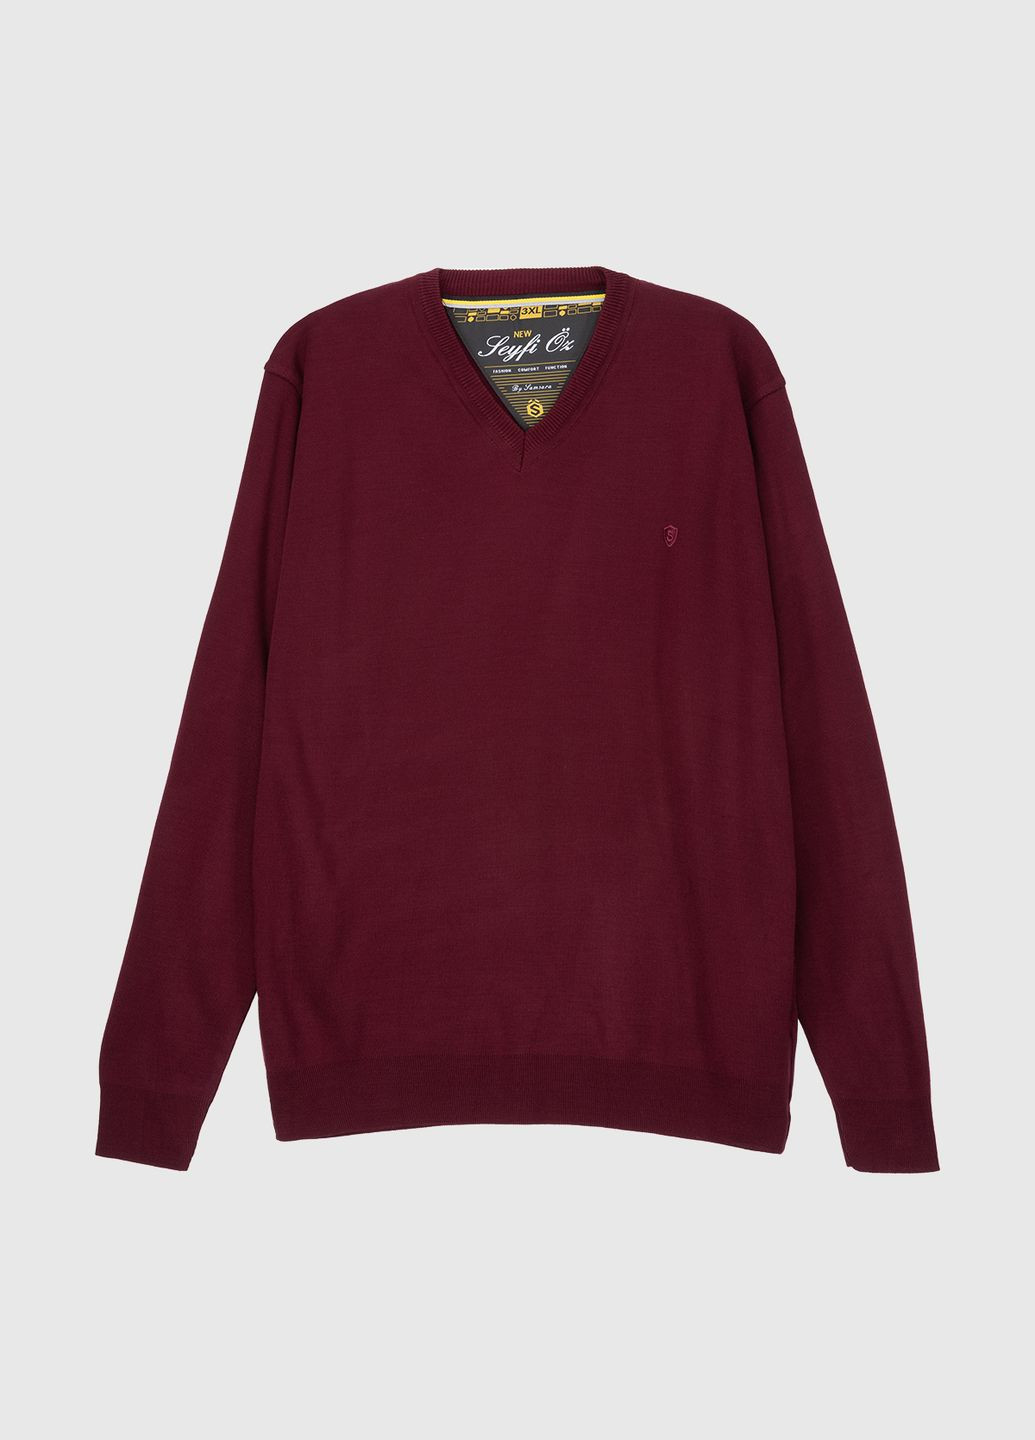 Бордовый демисезонный пуловер пуловер Akin Trico